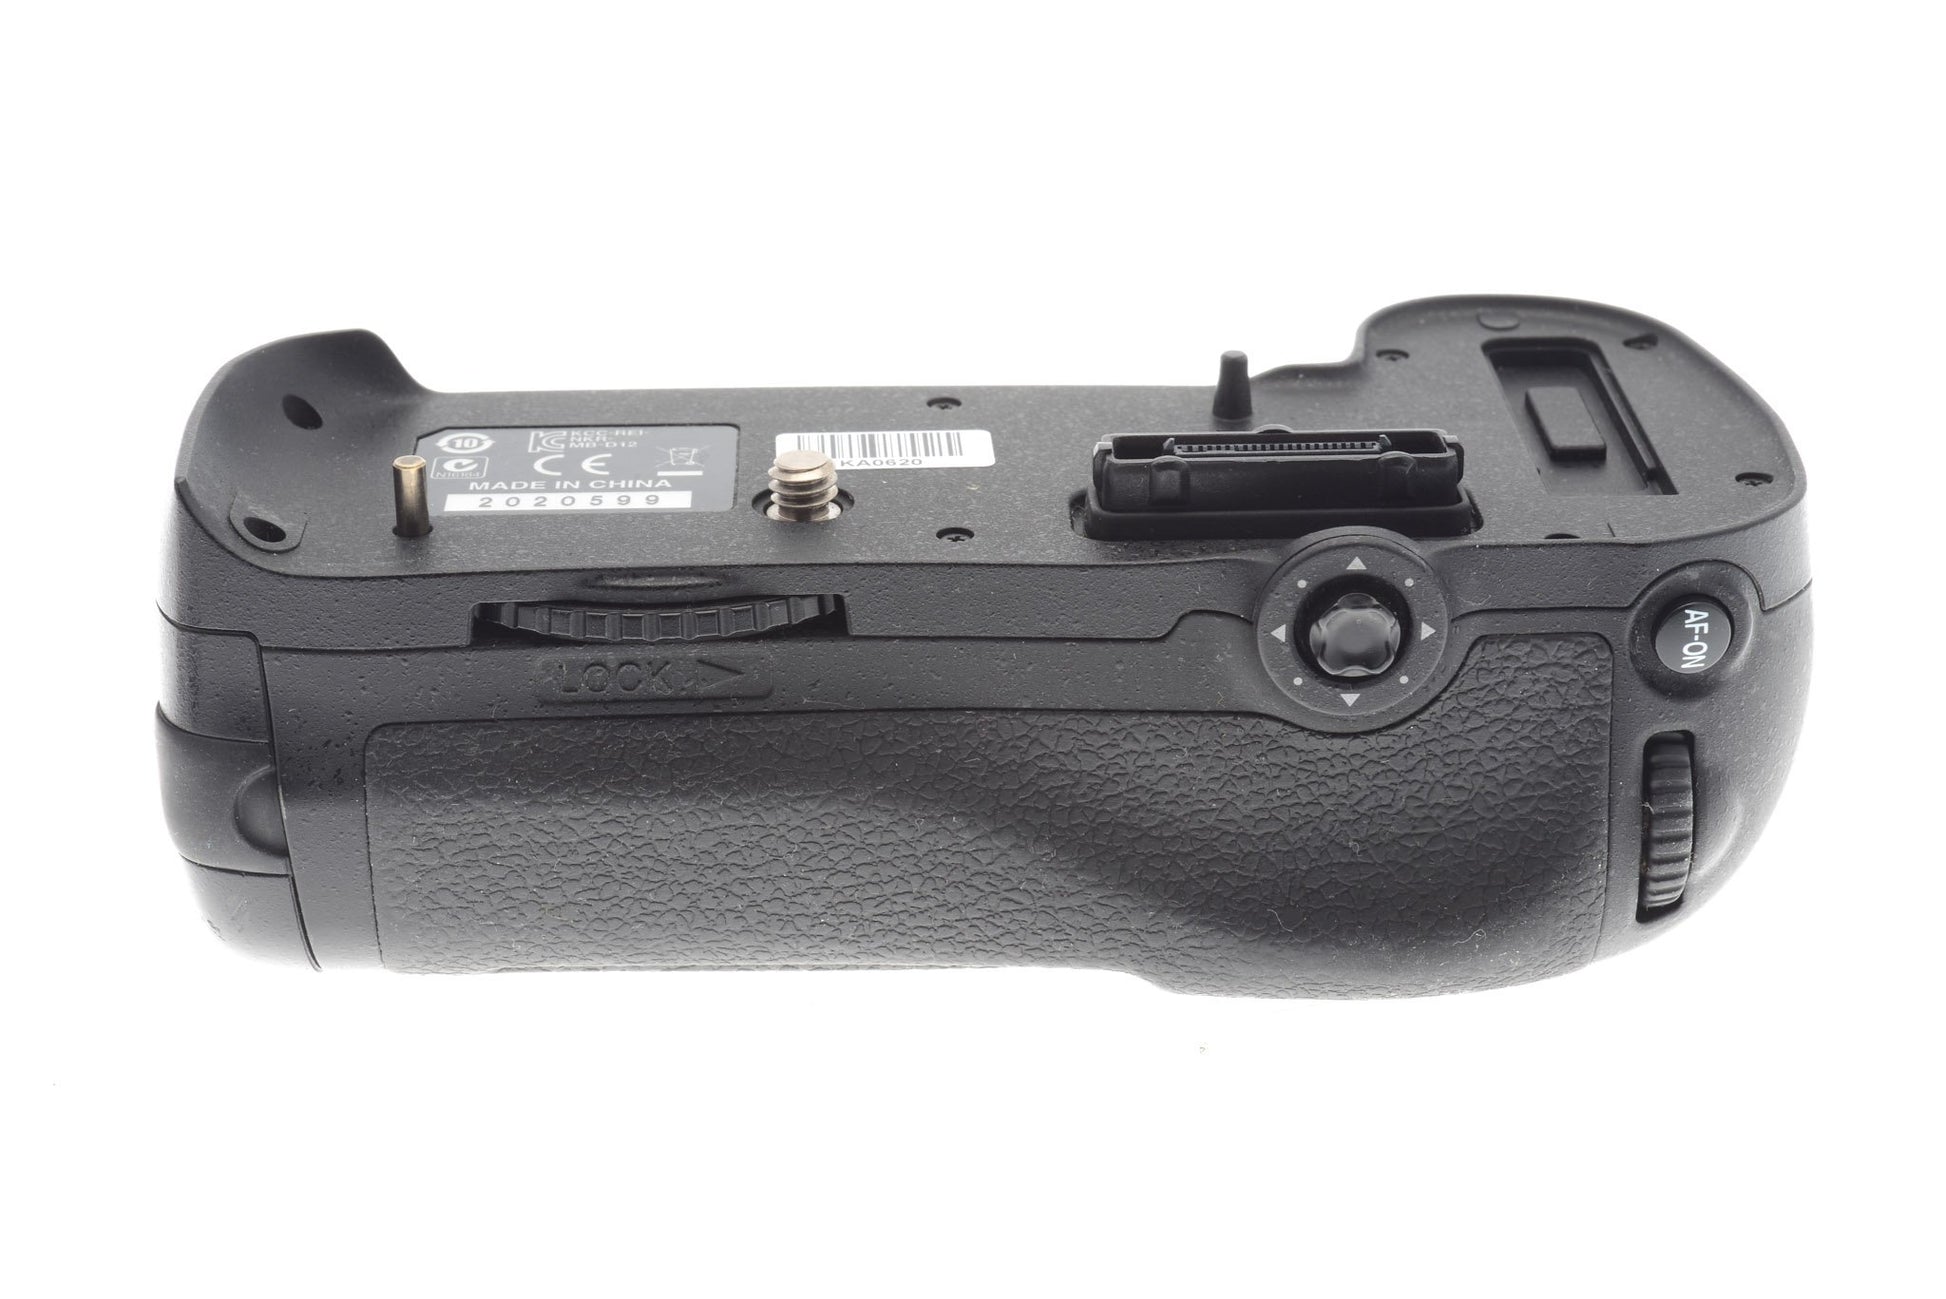 Nikon MB-D12 Multi Power Battery Pack - Accessory